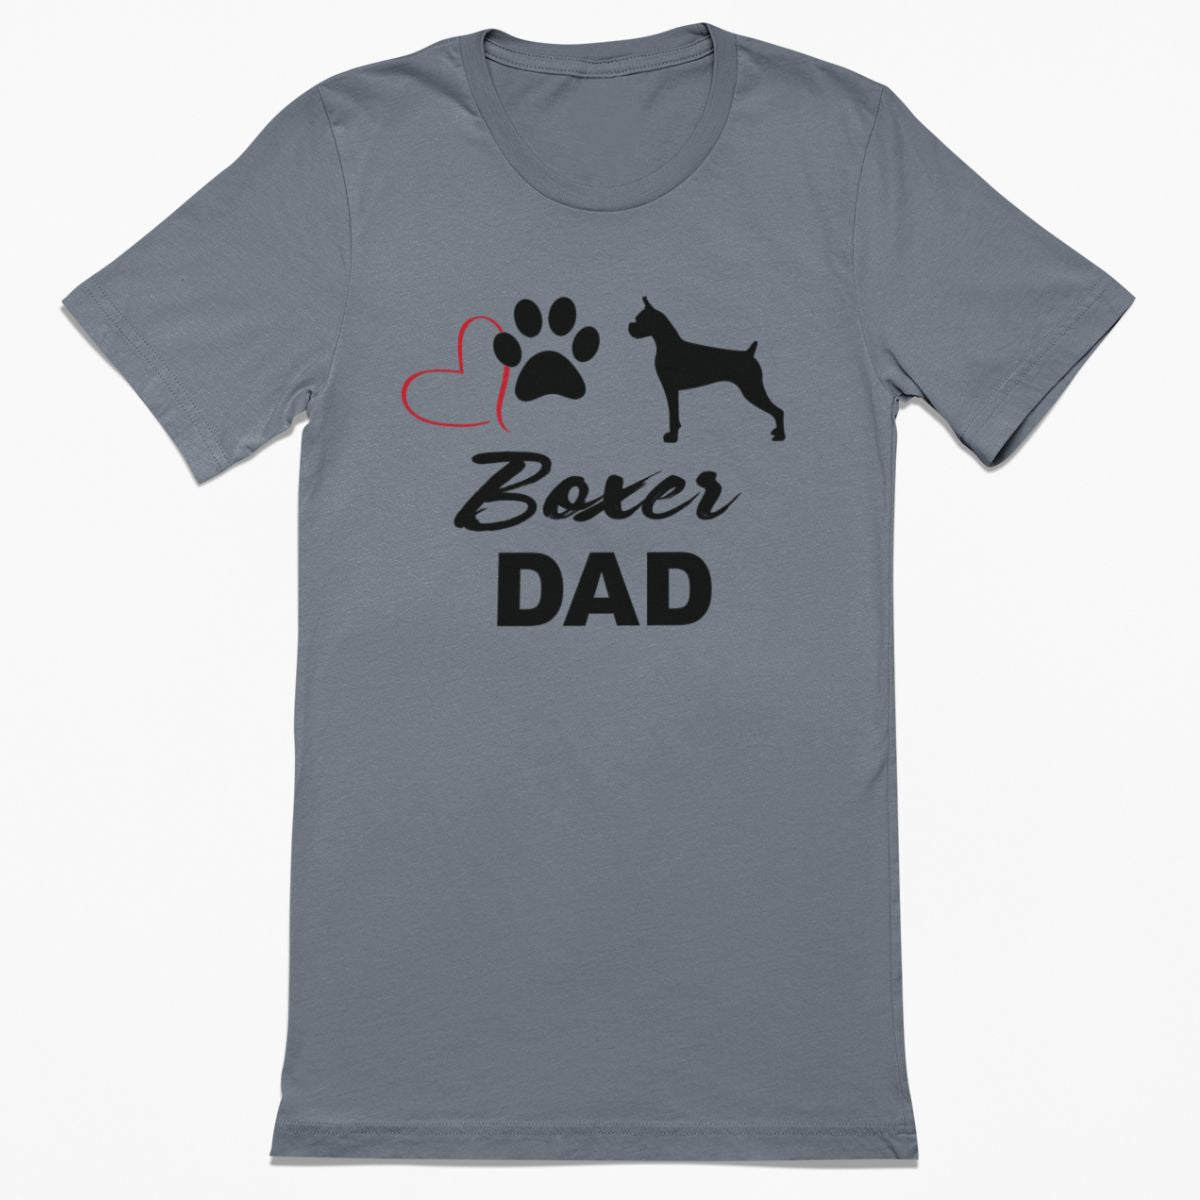 Boxer Dad Shirt